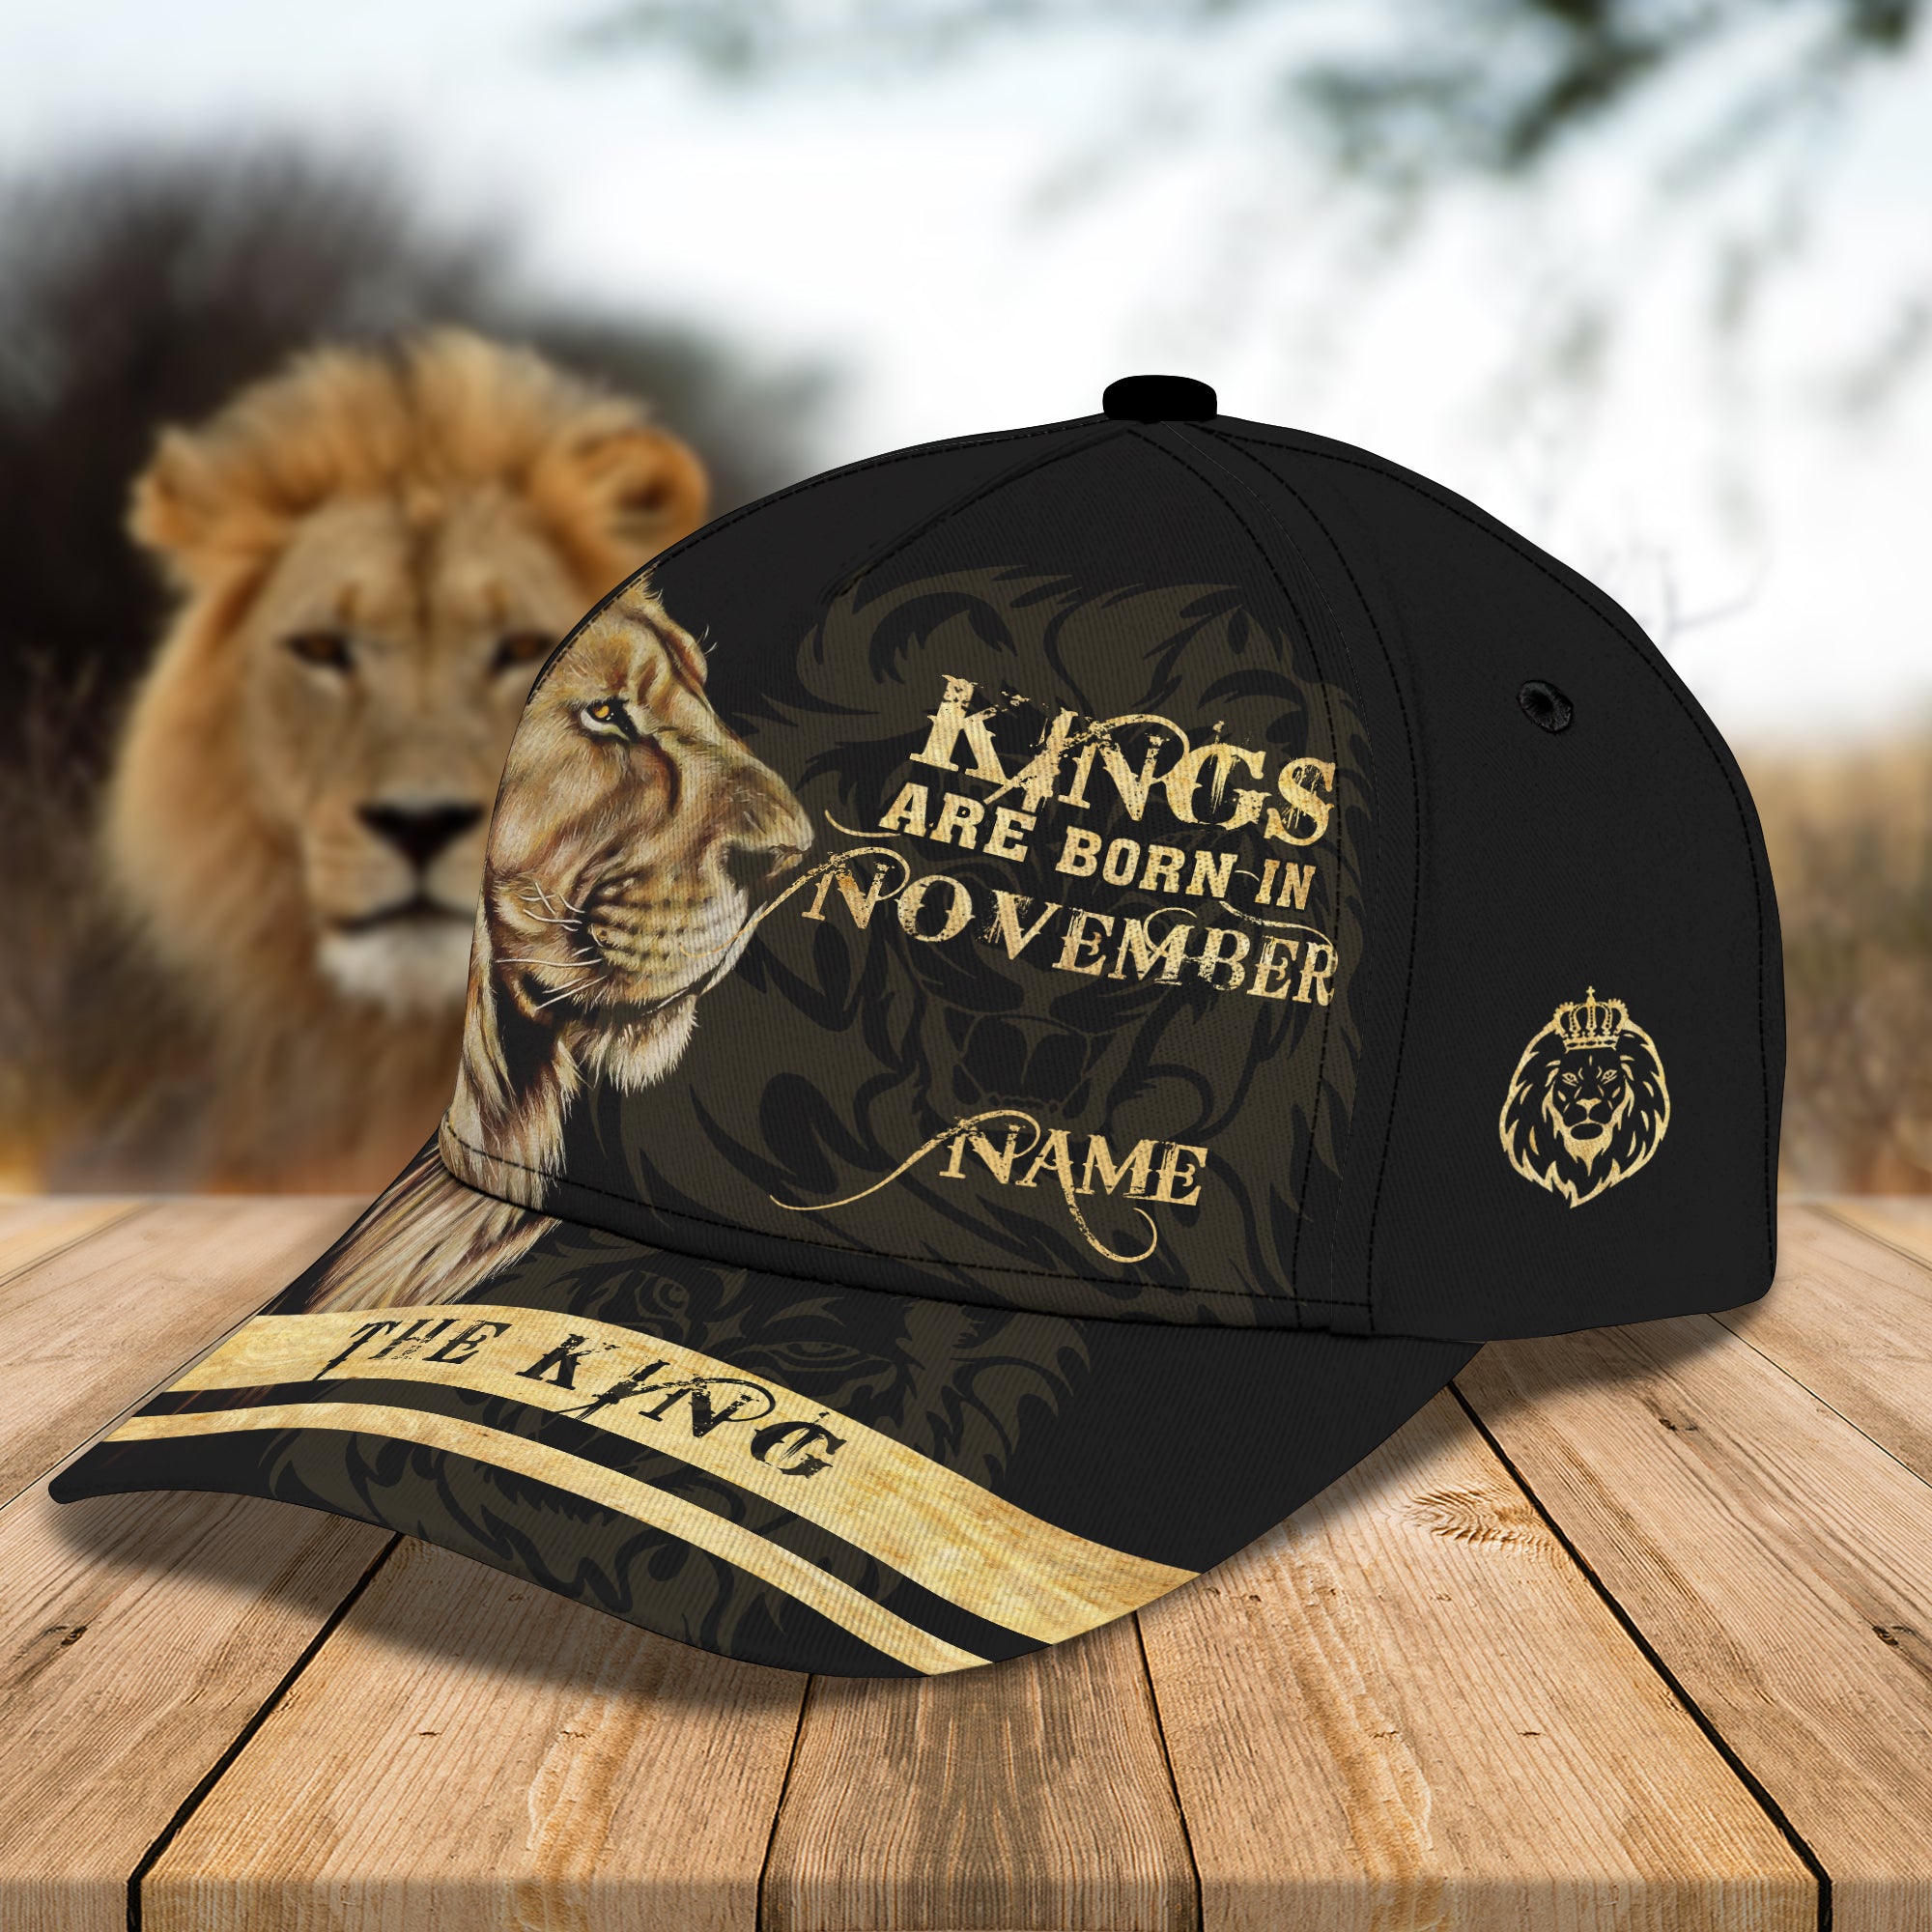 Kings Are Born In November- Personalized Name Cap 22 - Bhn97